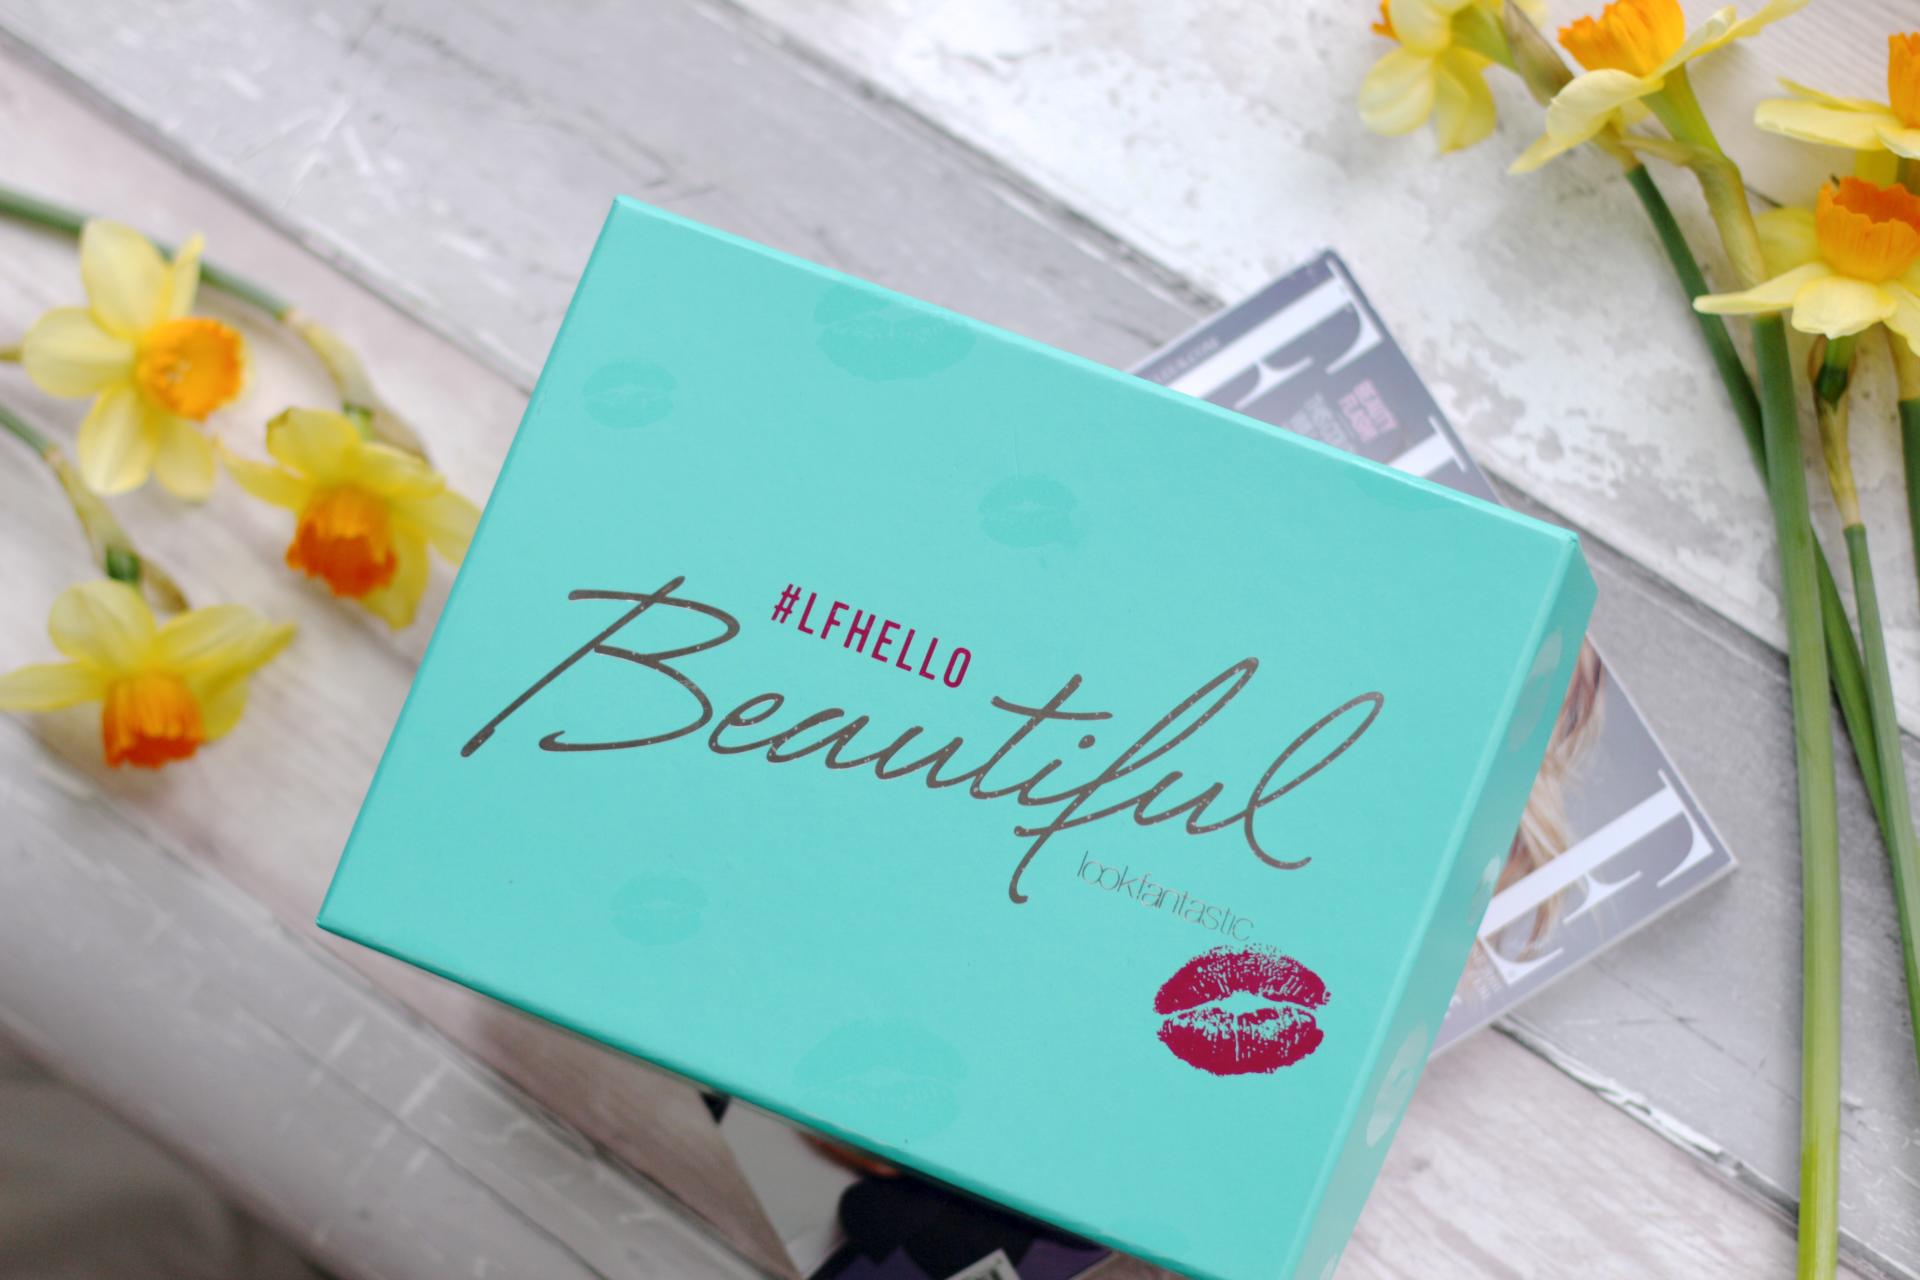 Lookfantastic May 2016 Beauty Box #LFHELLO Unboxing 